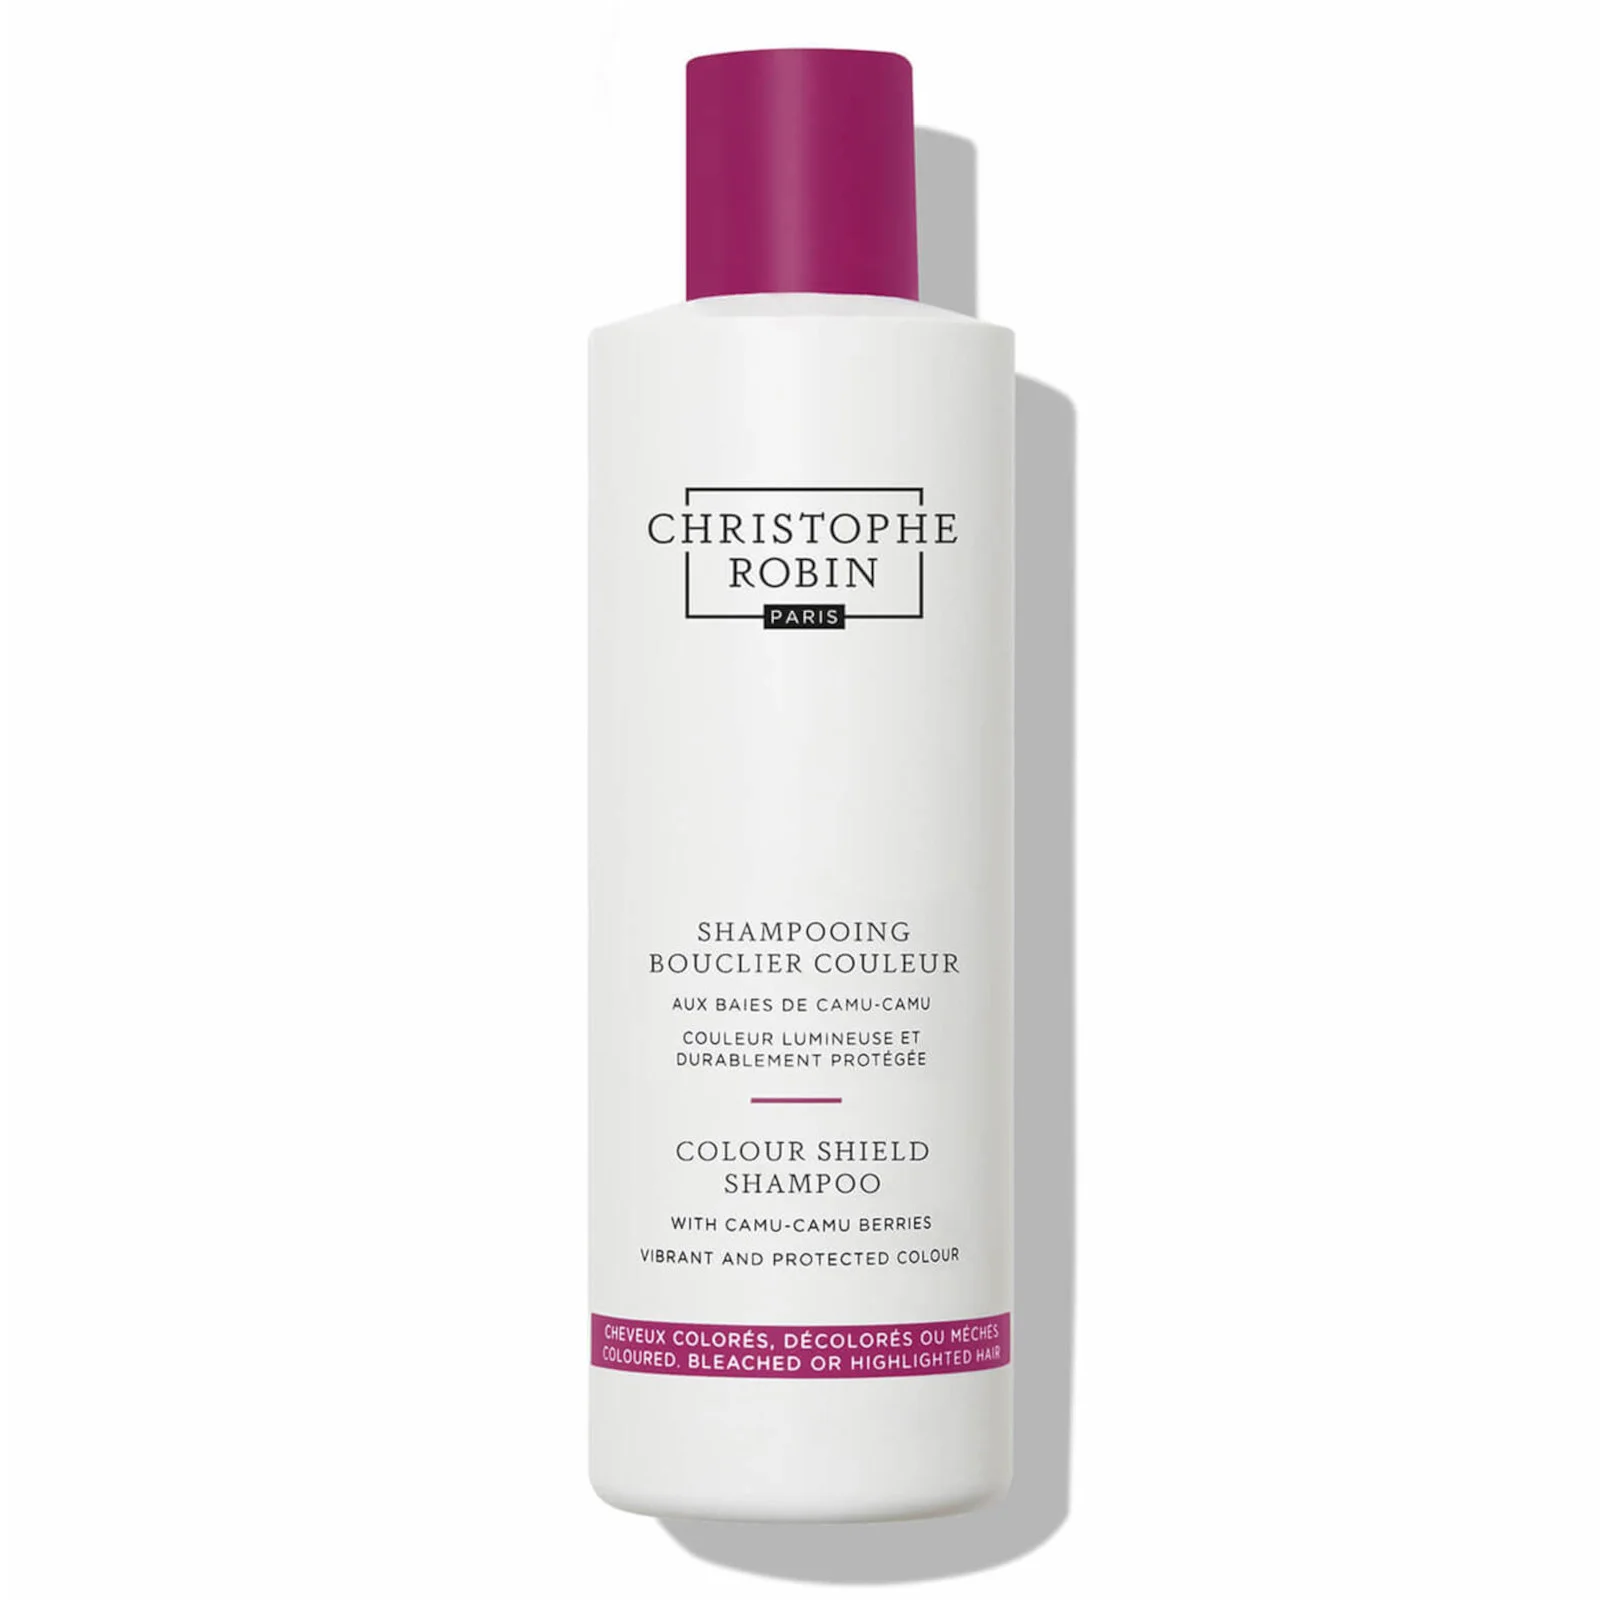 Christophe Robin Colour Shield Shampoo with Camu Camu Berries 250ml Image 1